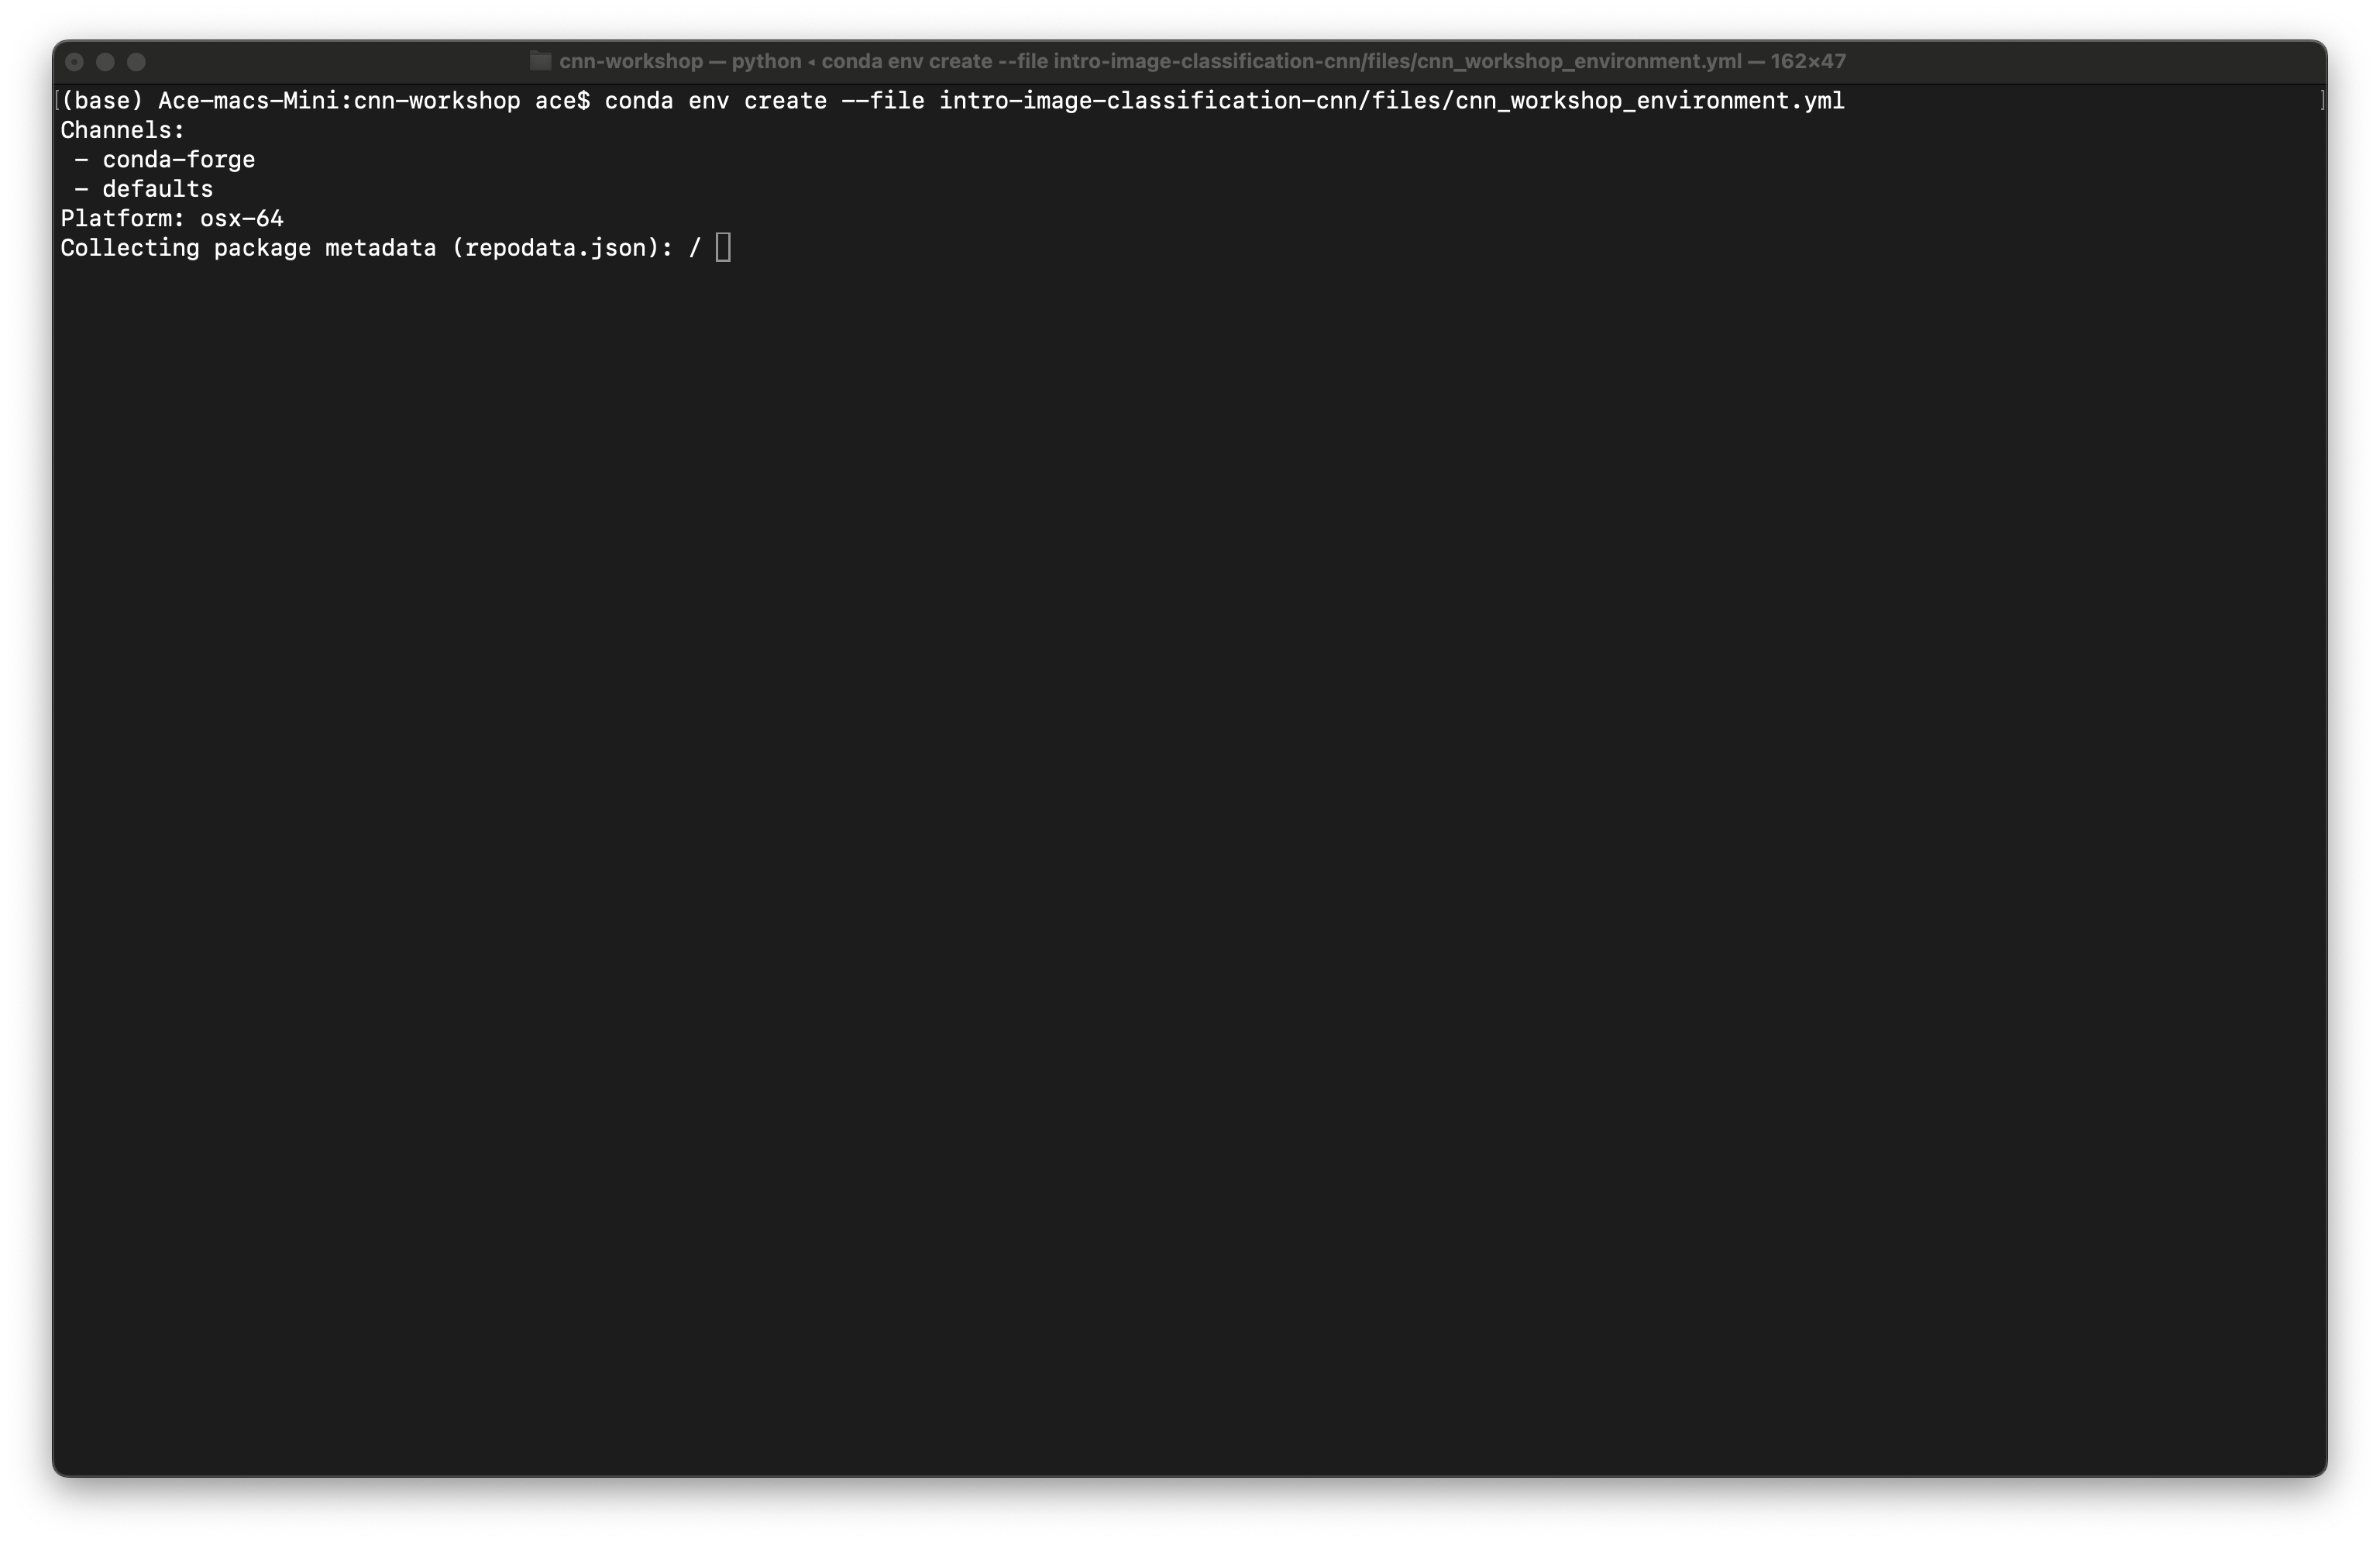 Screenshot of creating conda enviroment on a Mac.